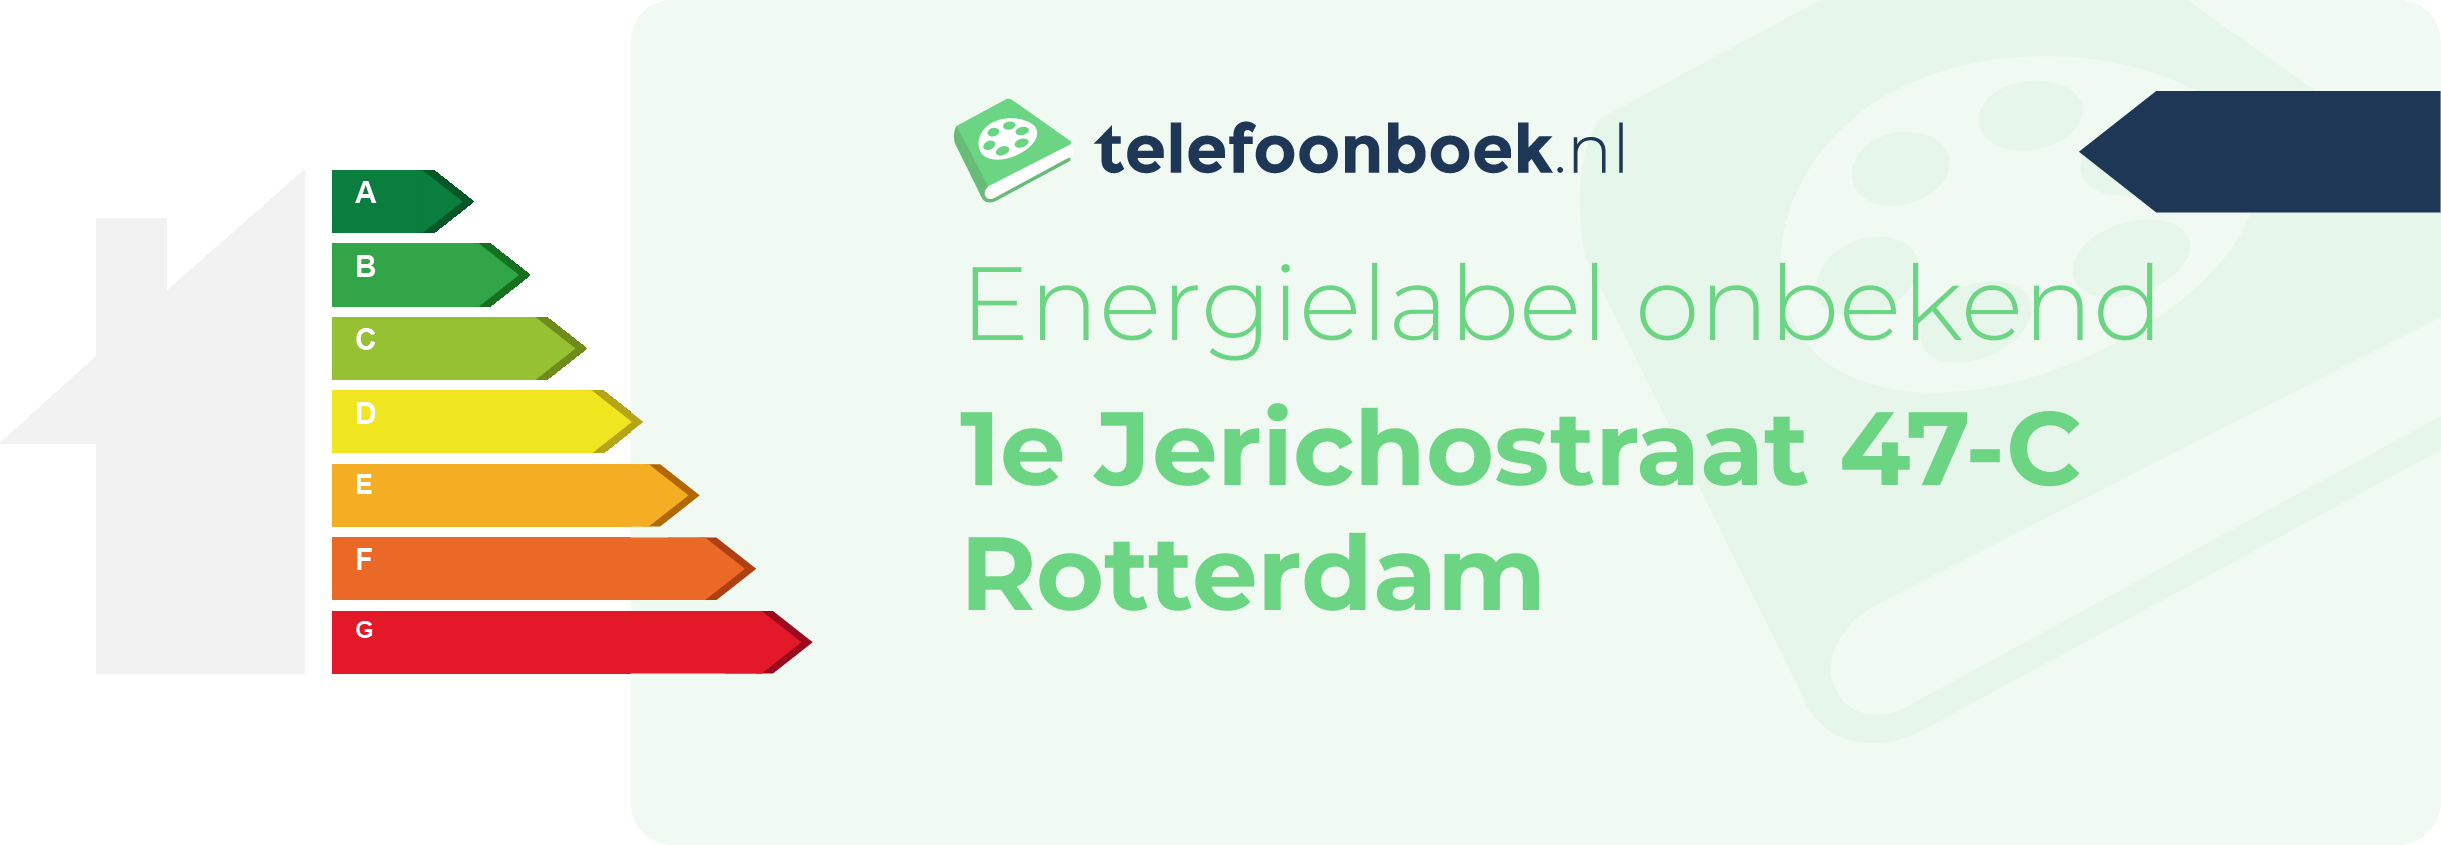 Energielabel 1e Jerichostraat 47-C Rotterdam